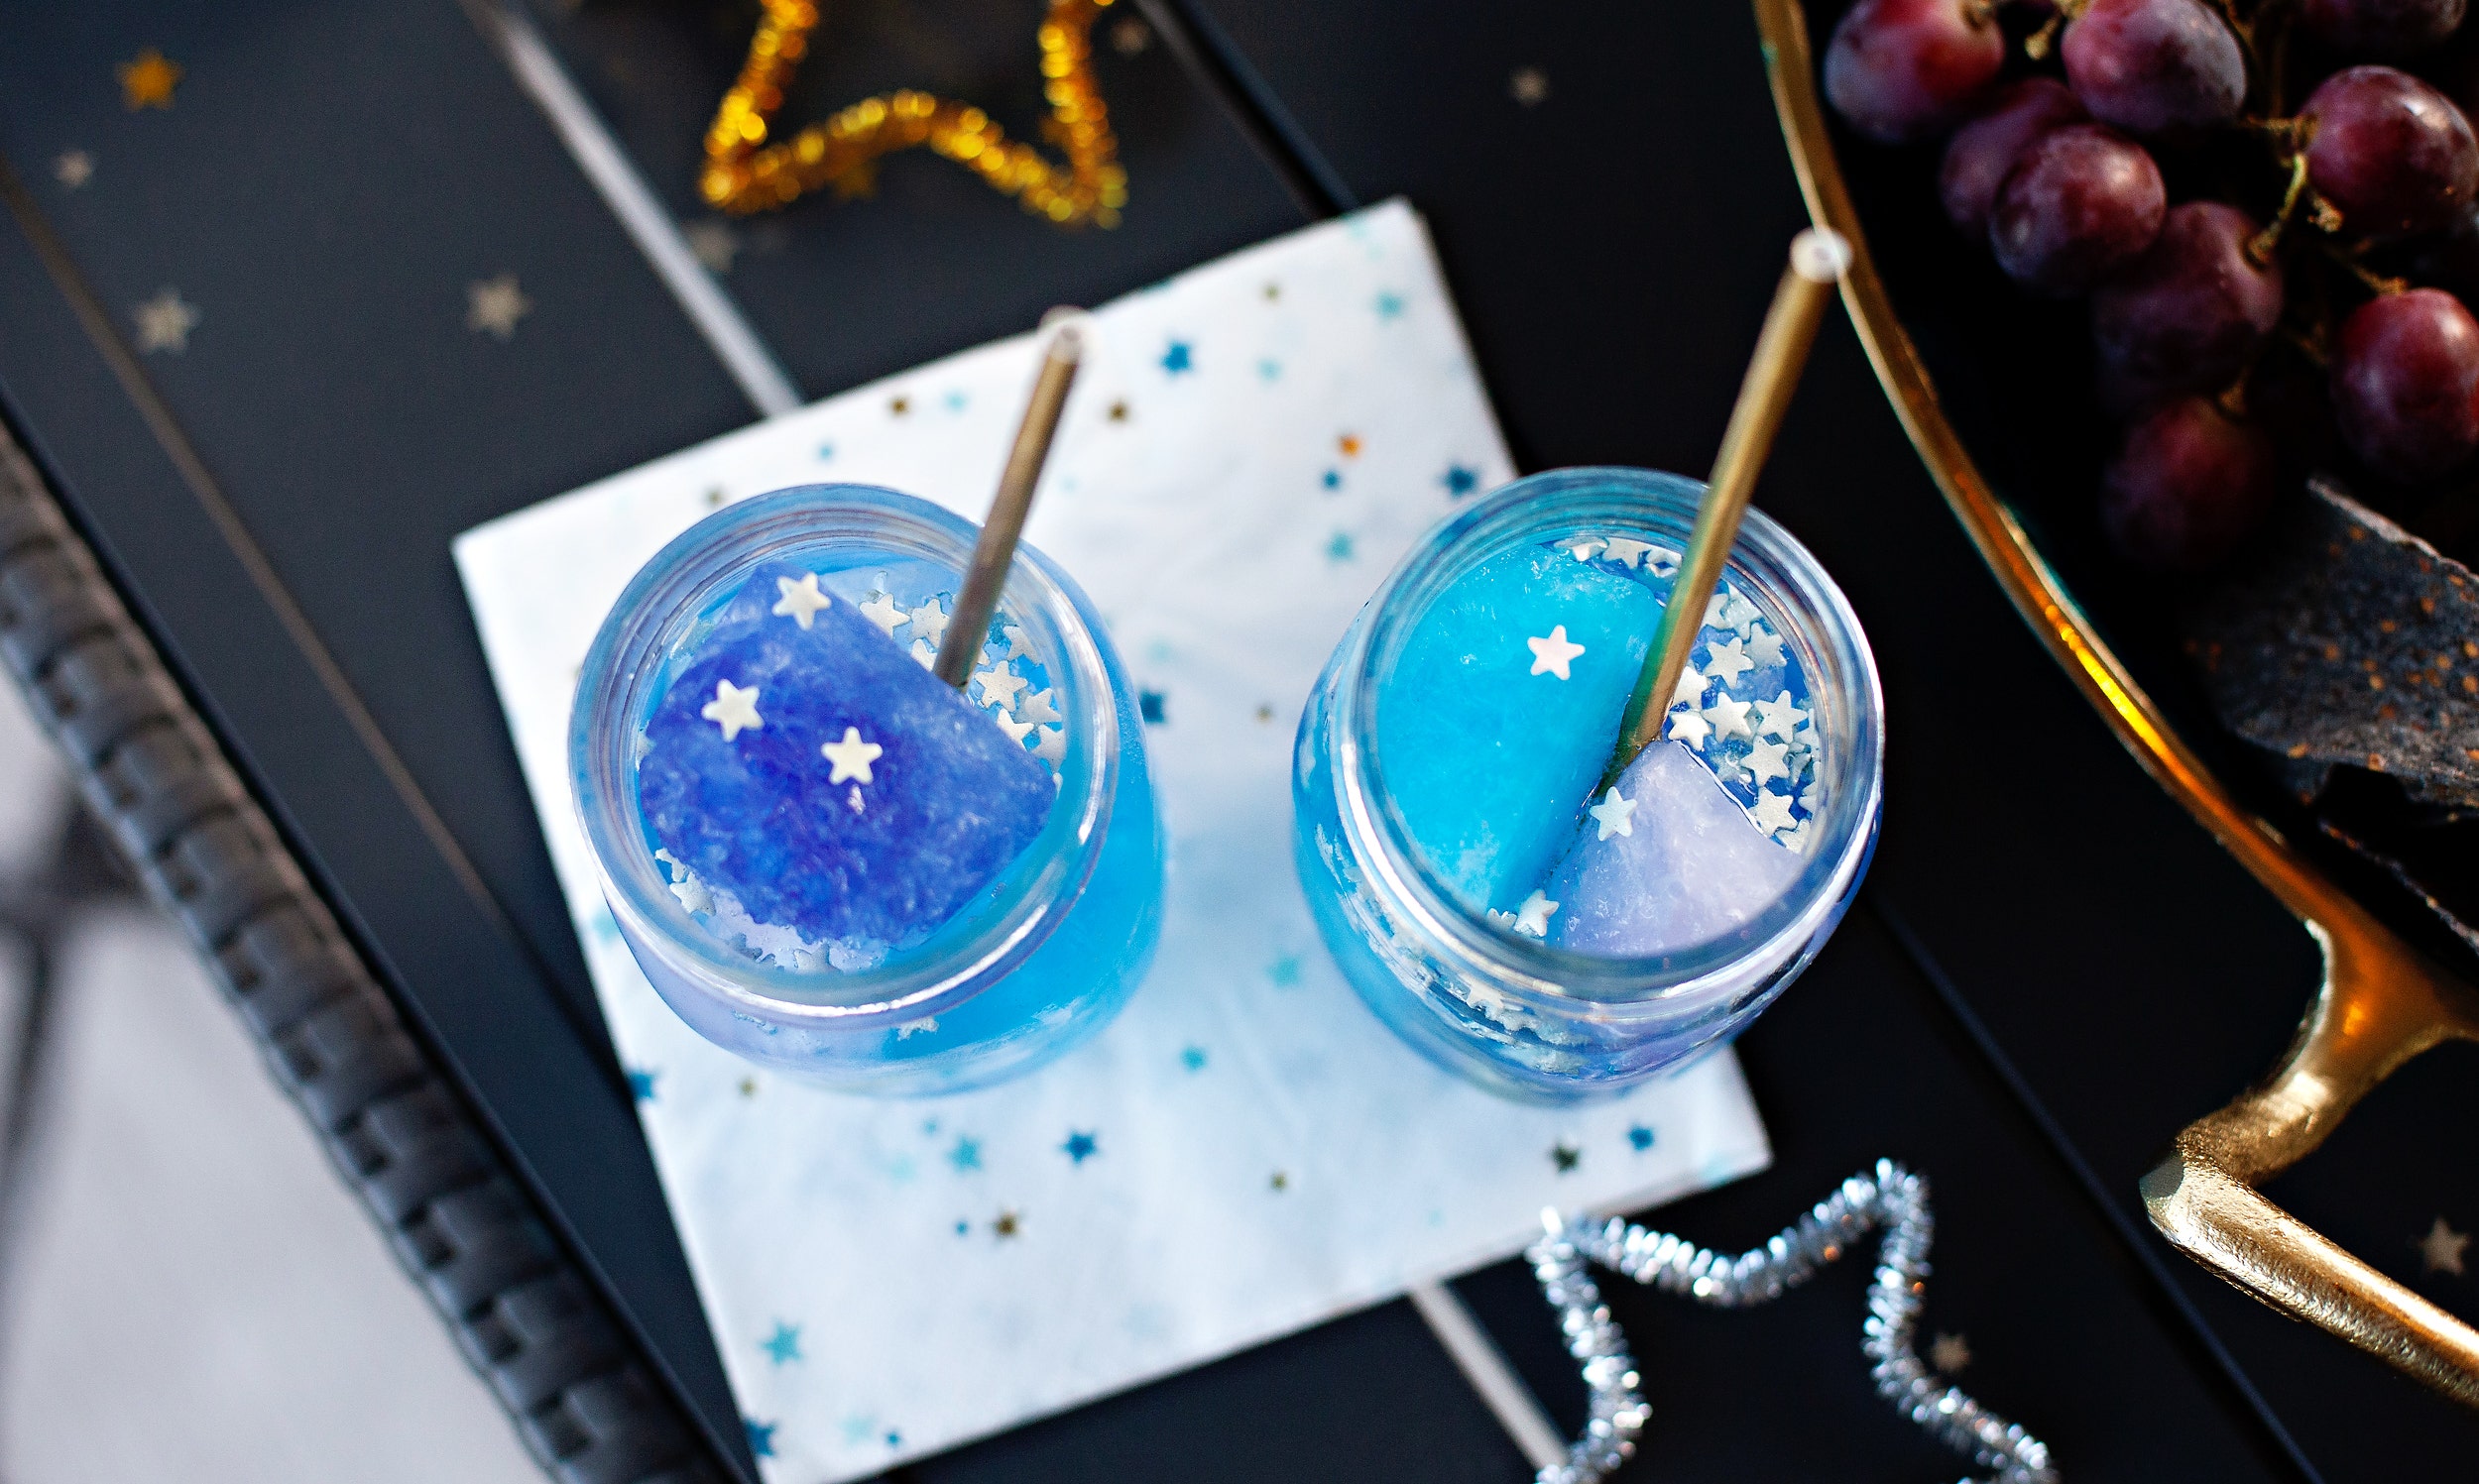 stargazing party drinks